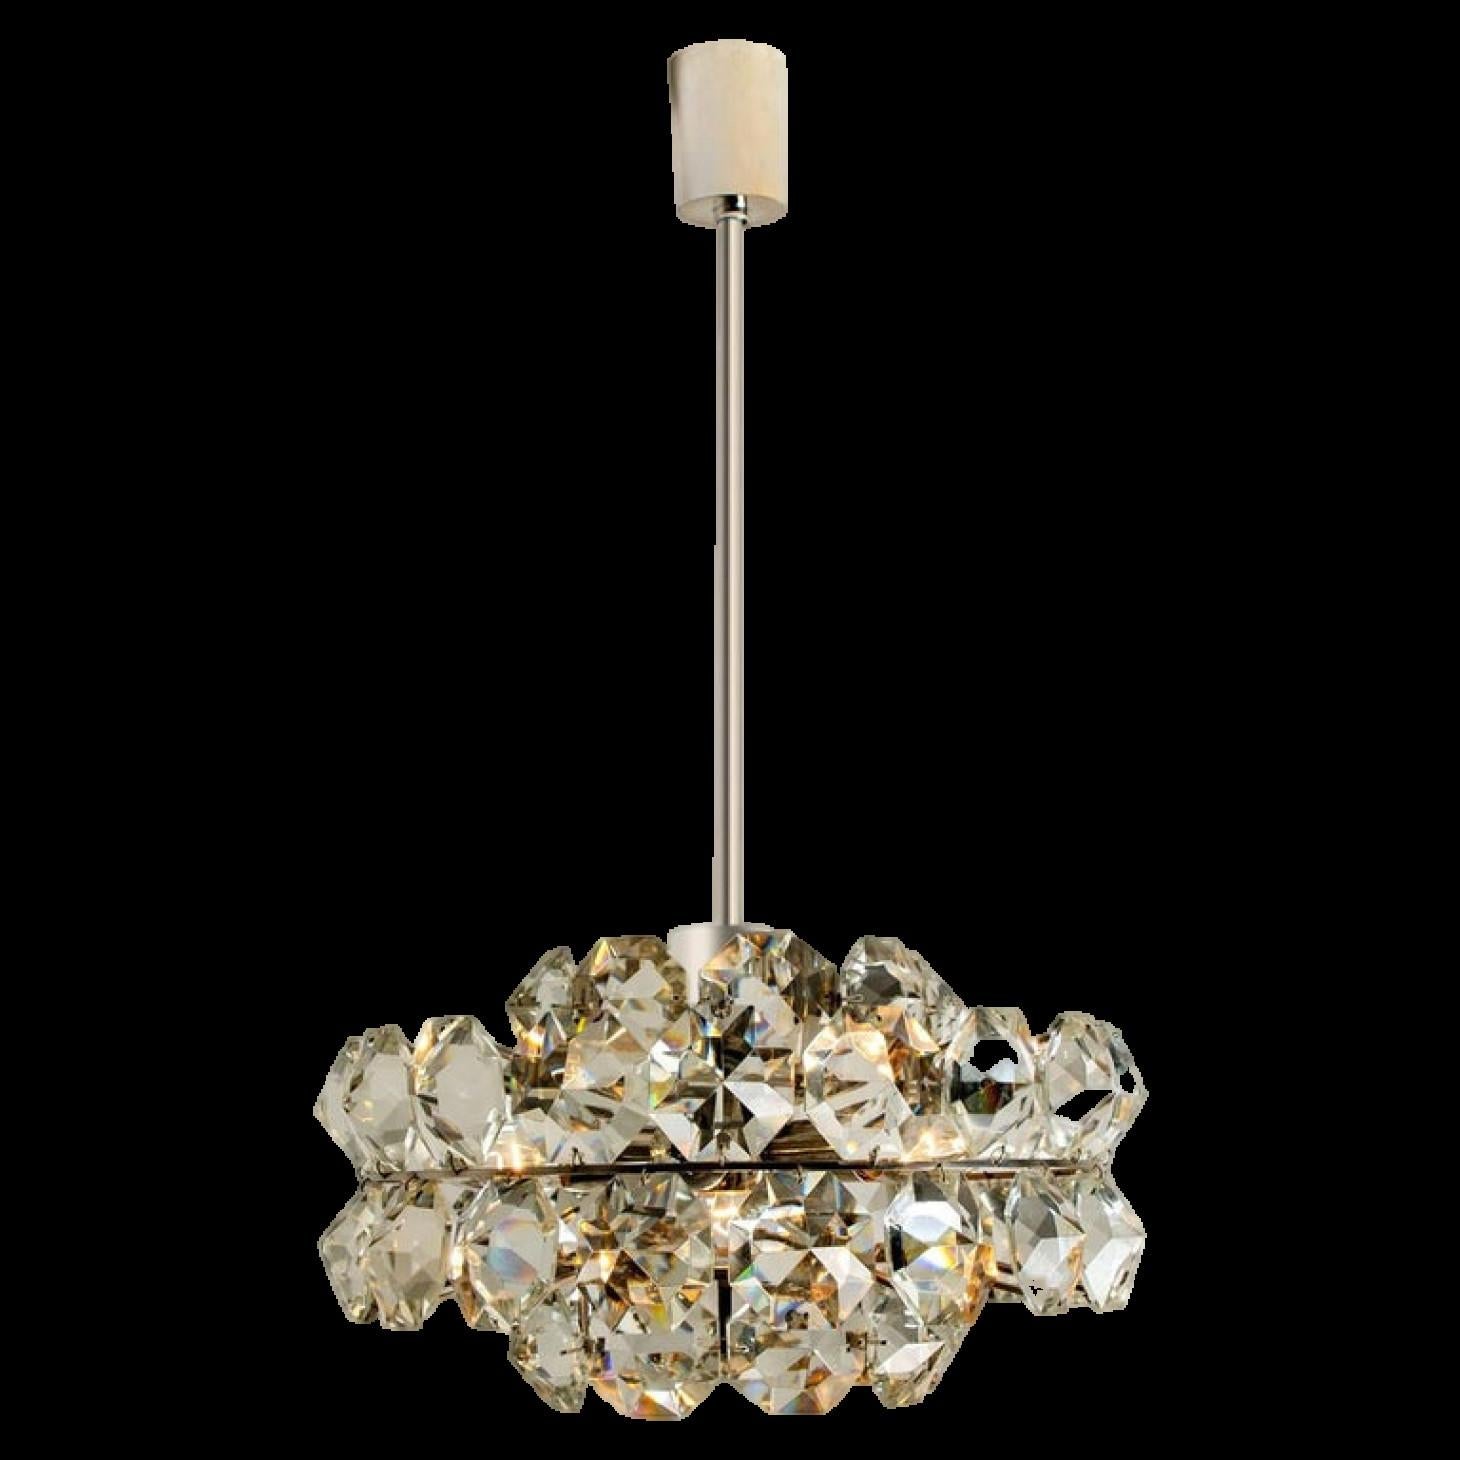 Bakalowits chandelier, 1960s
Original condition.

